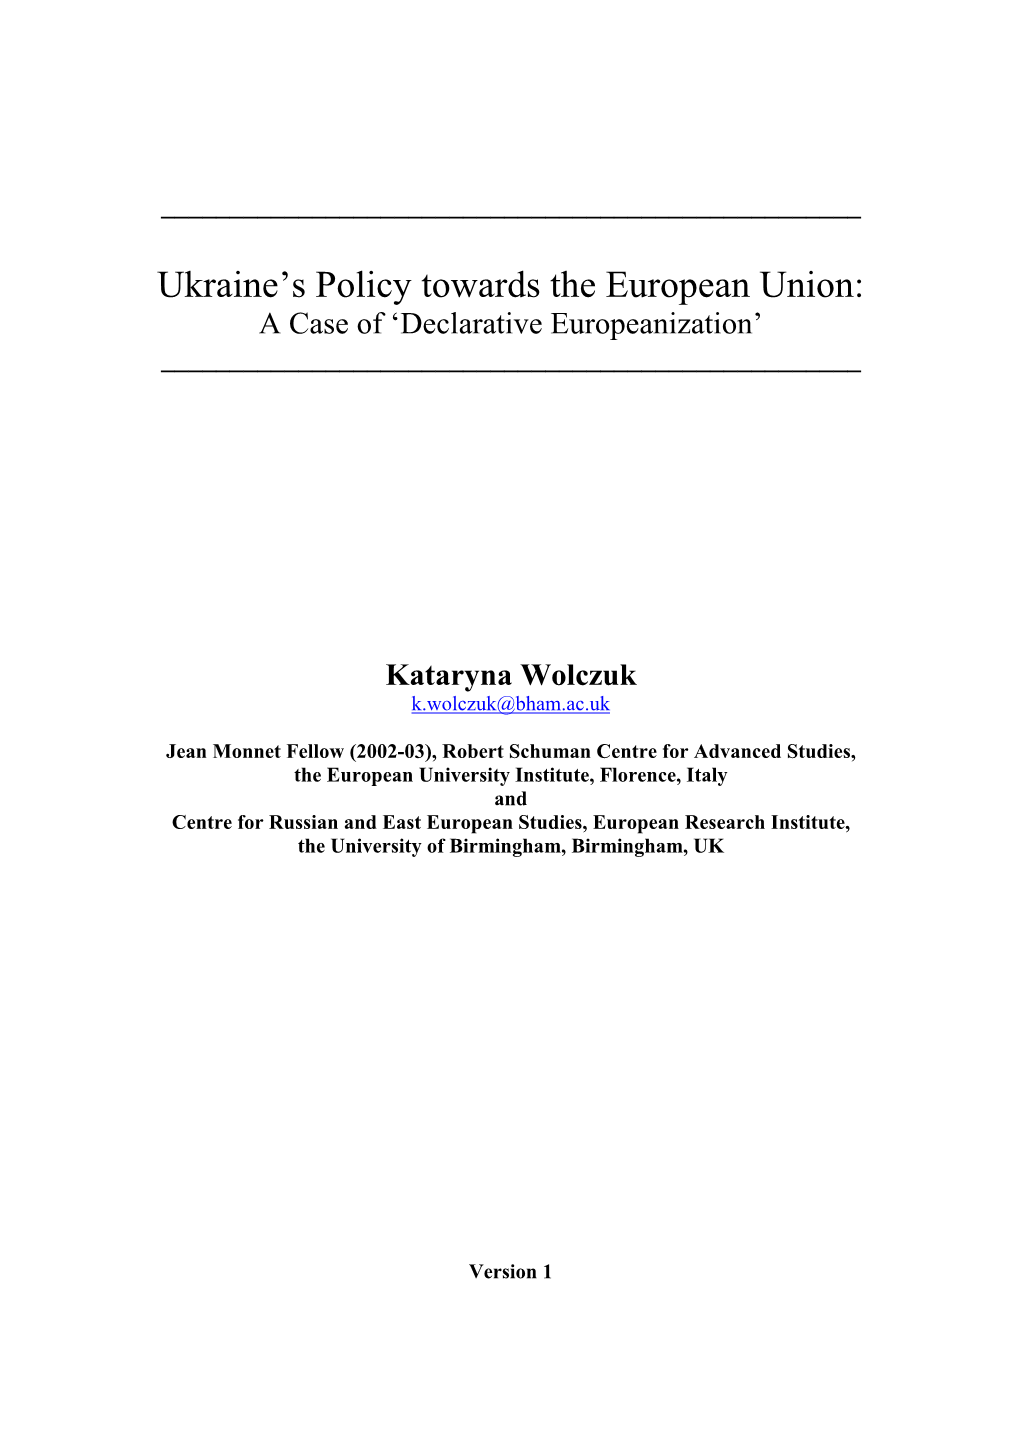 Ukraine's Policy Towards the European Union